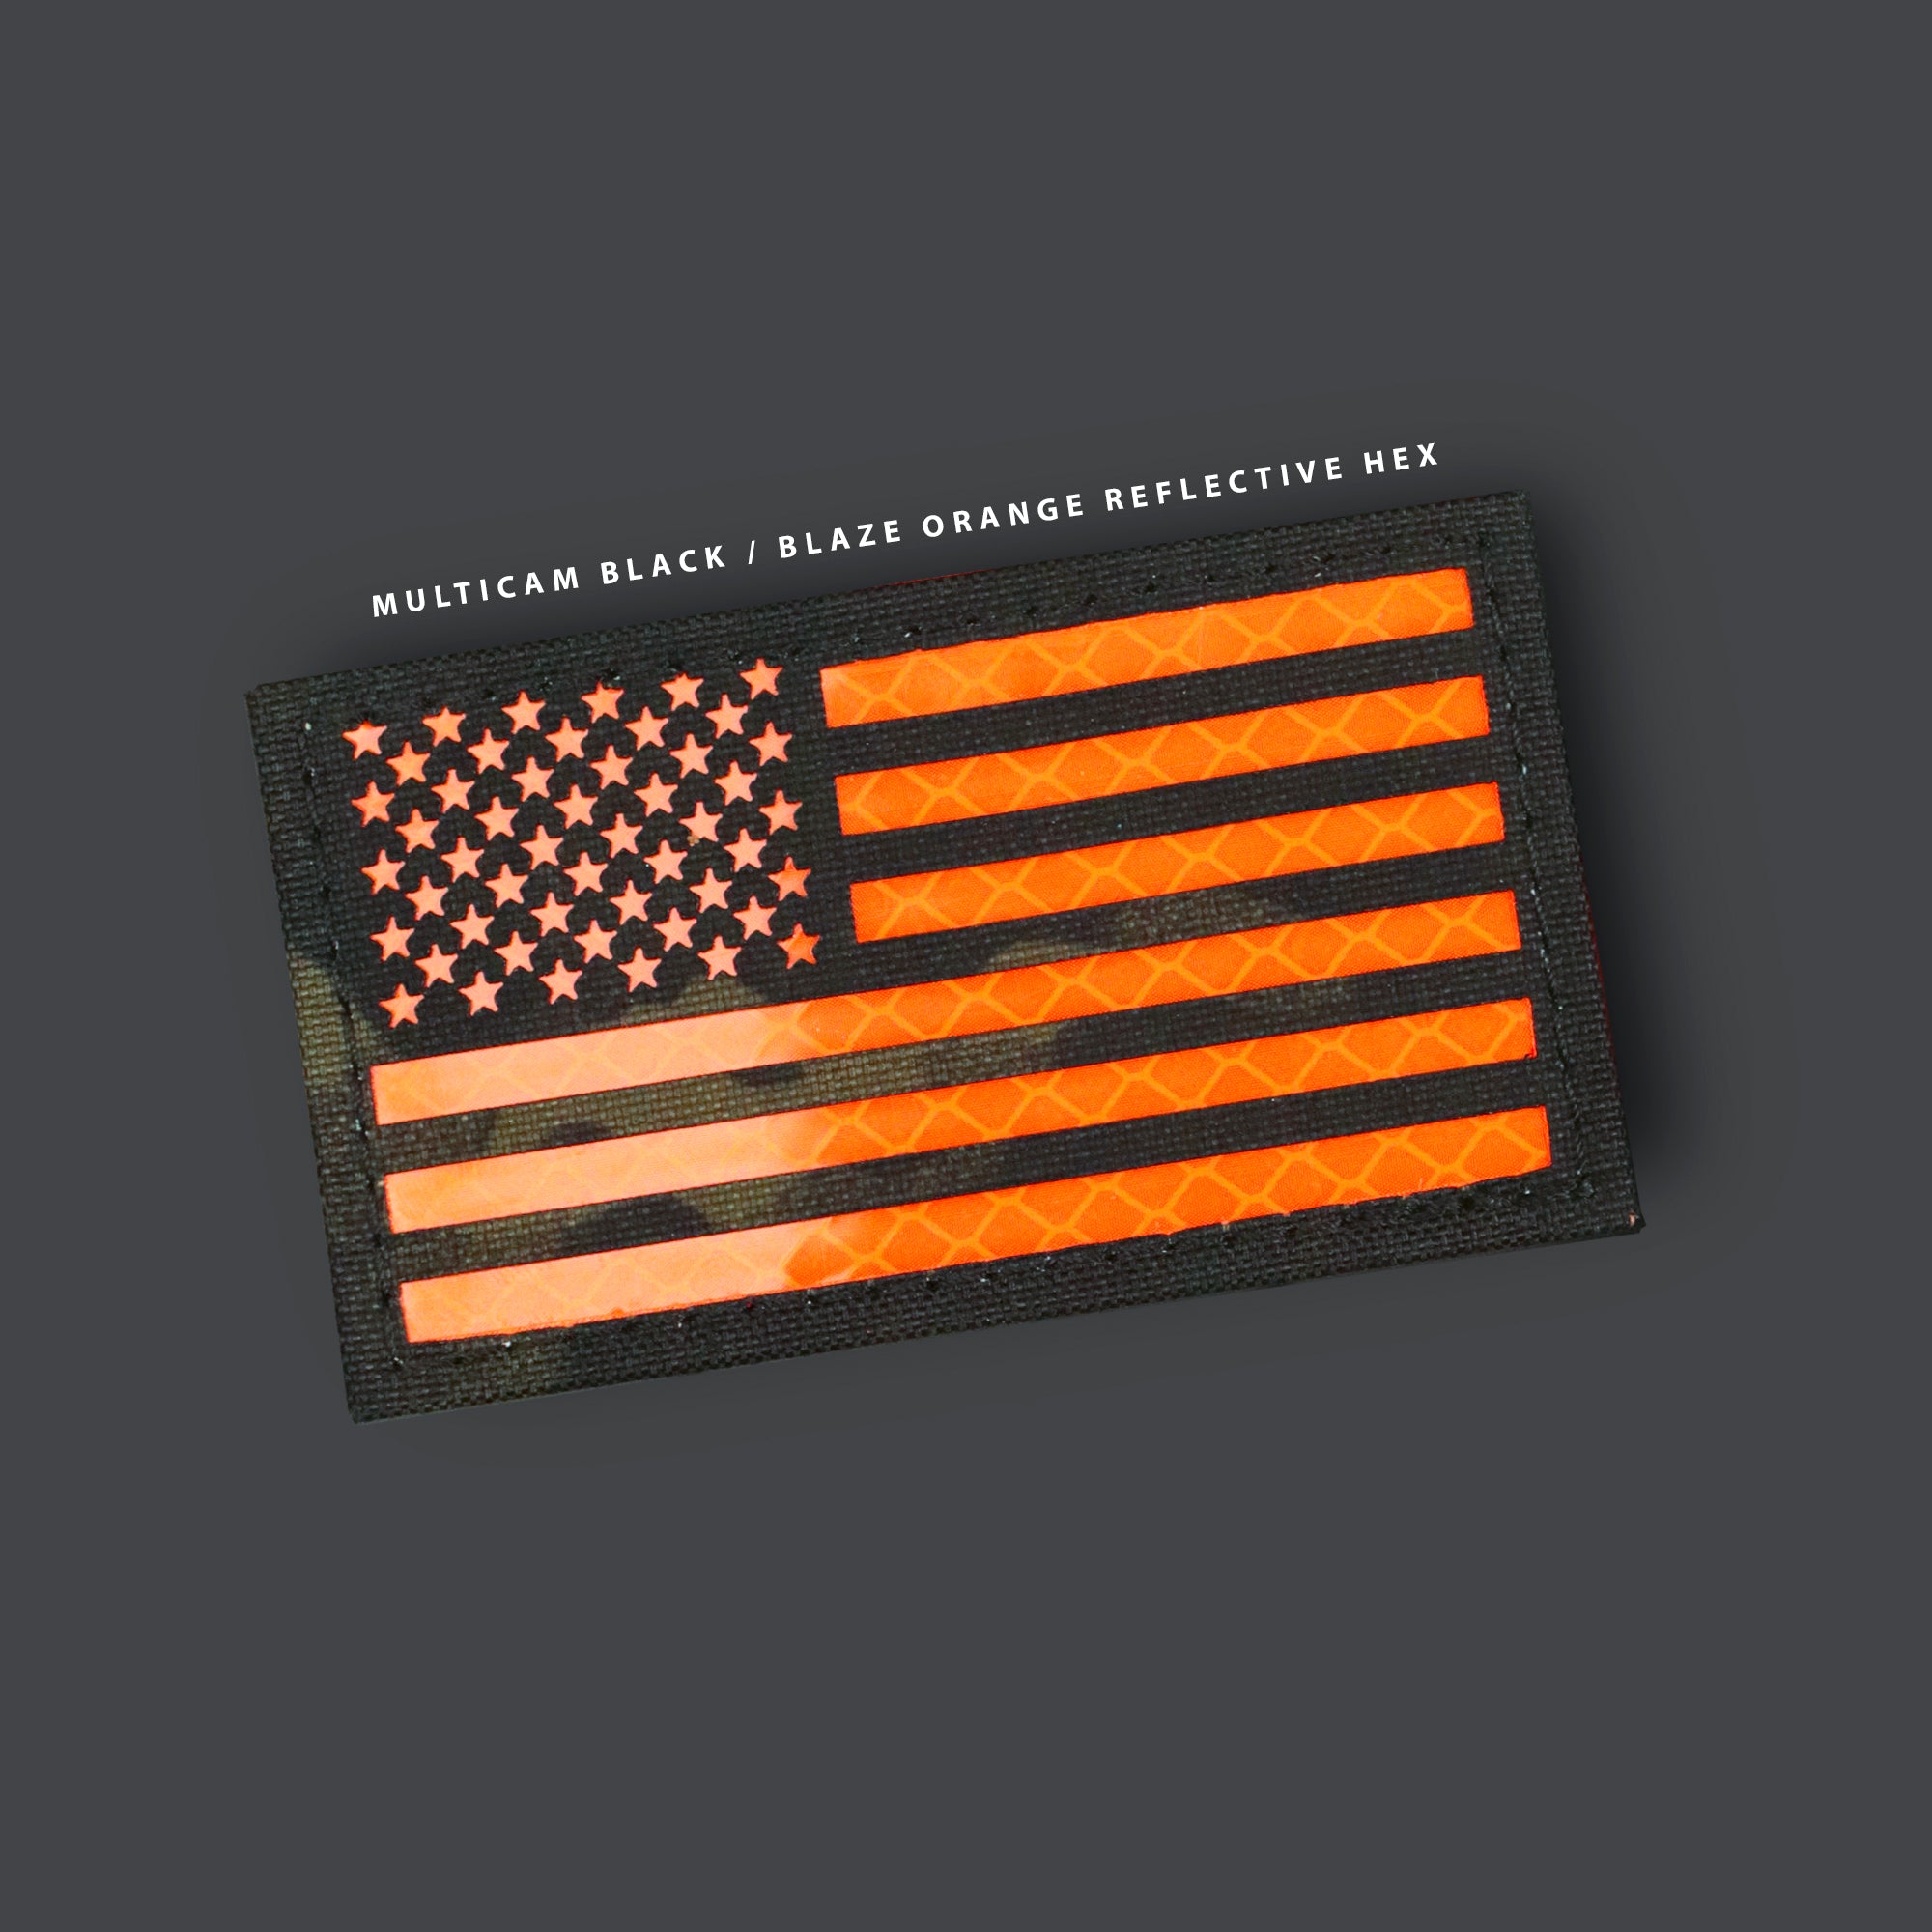 American Flag Patch - Multicam BLK / Blaze Orange hex reflective